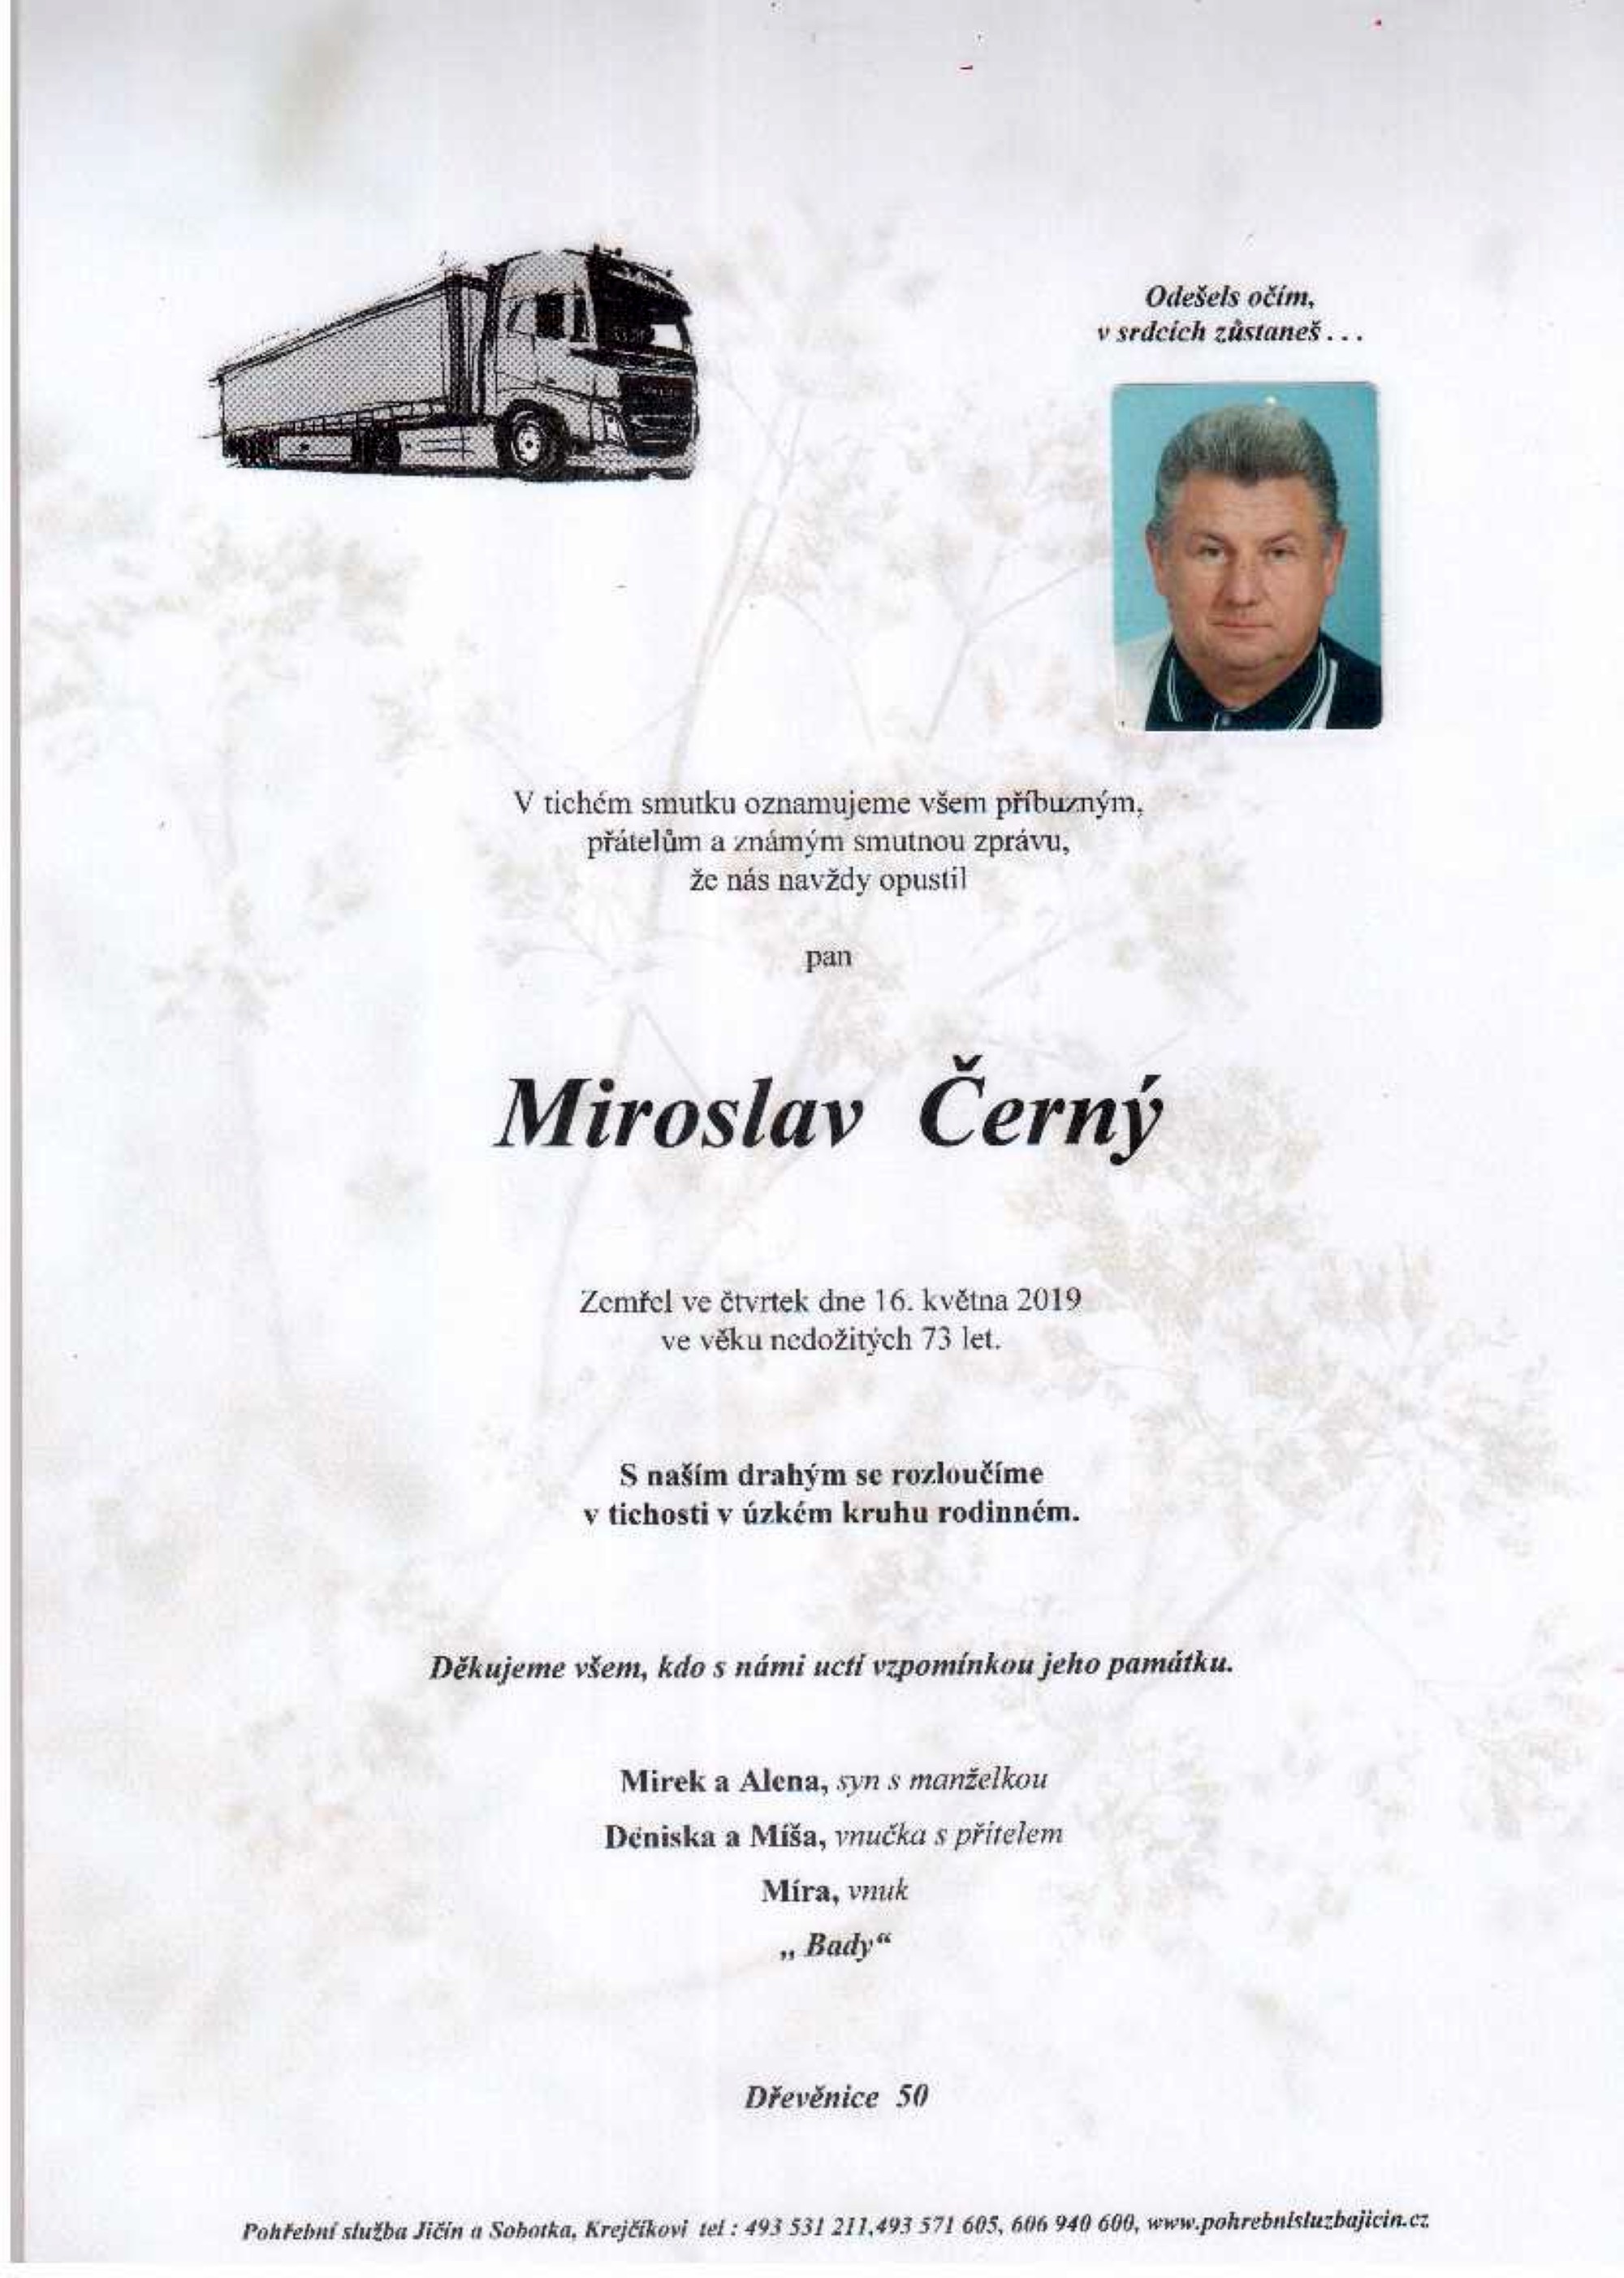 Miroslav Černý